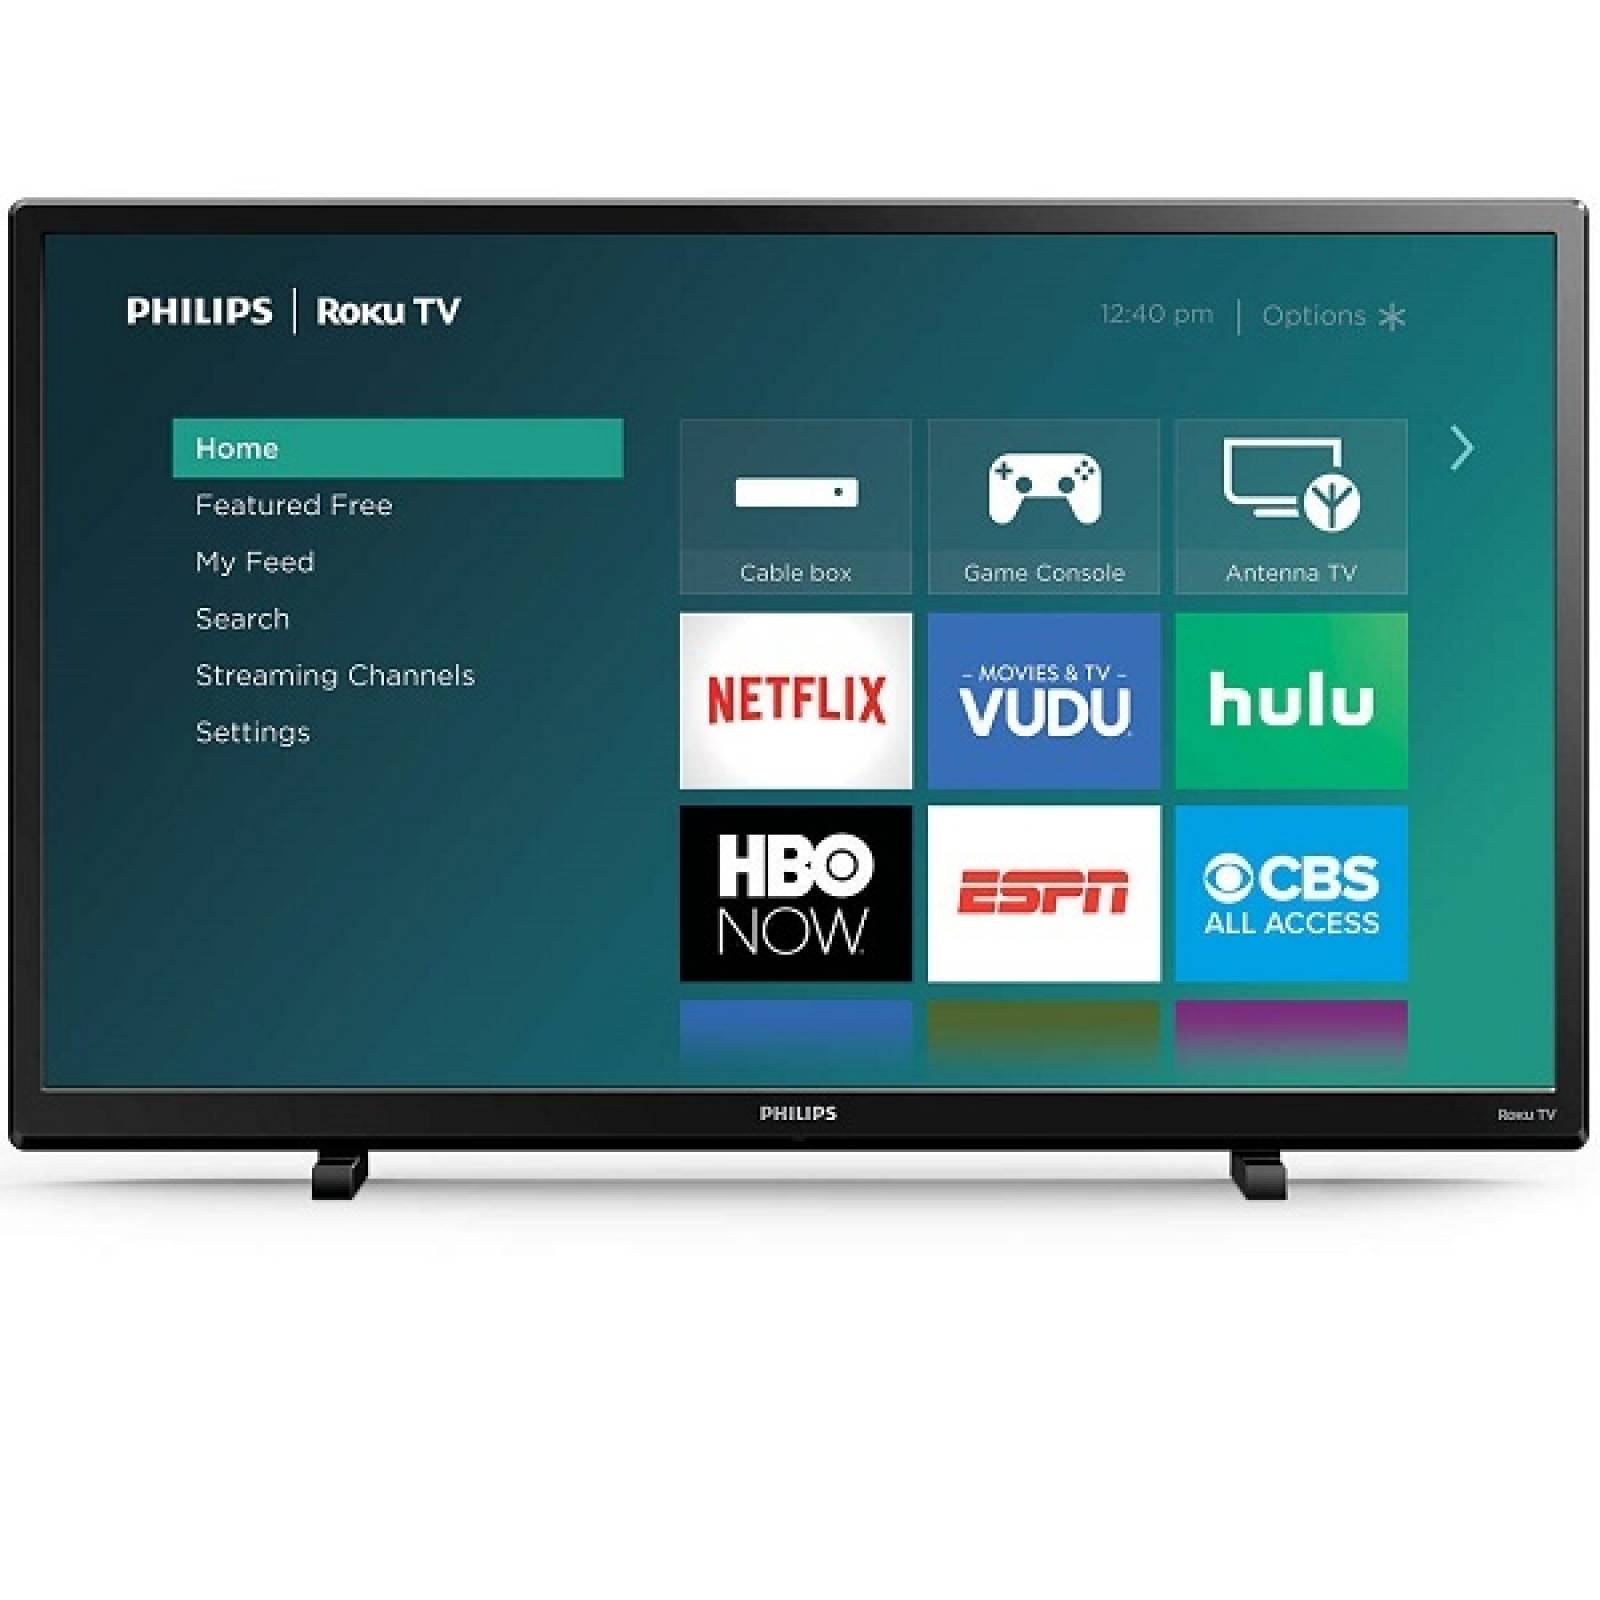 Smart TV Philips 32 Roku LED TV HD 120 PMR 32PFL4664/F7 - Reacondicionado